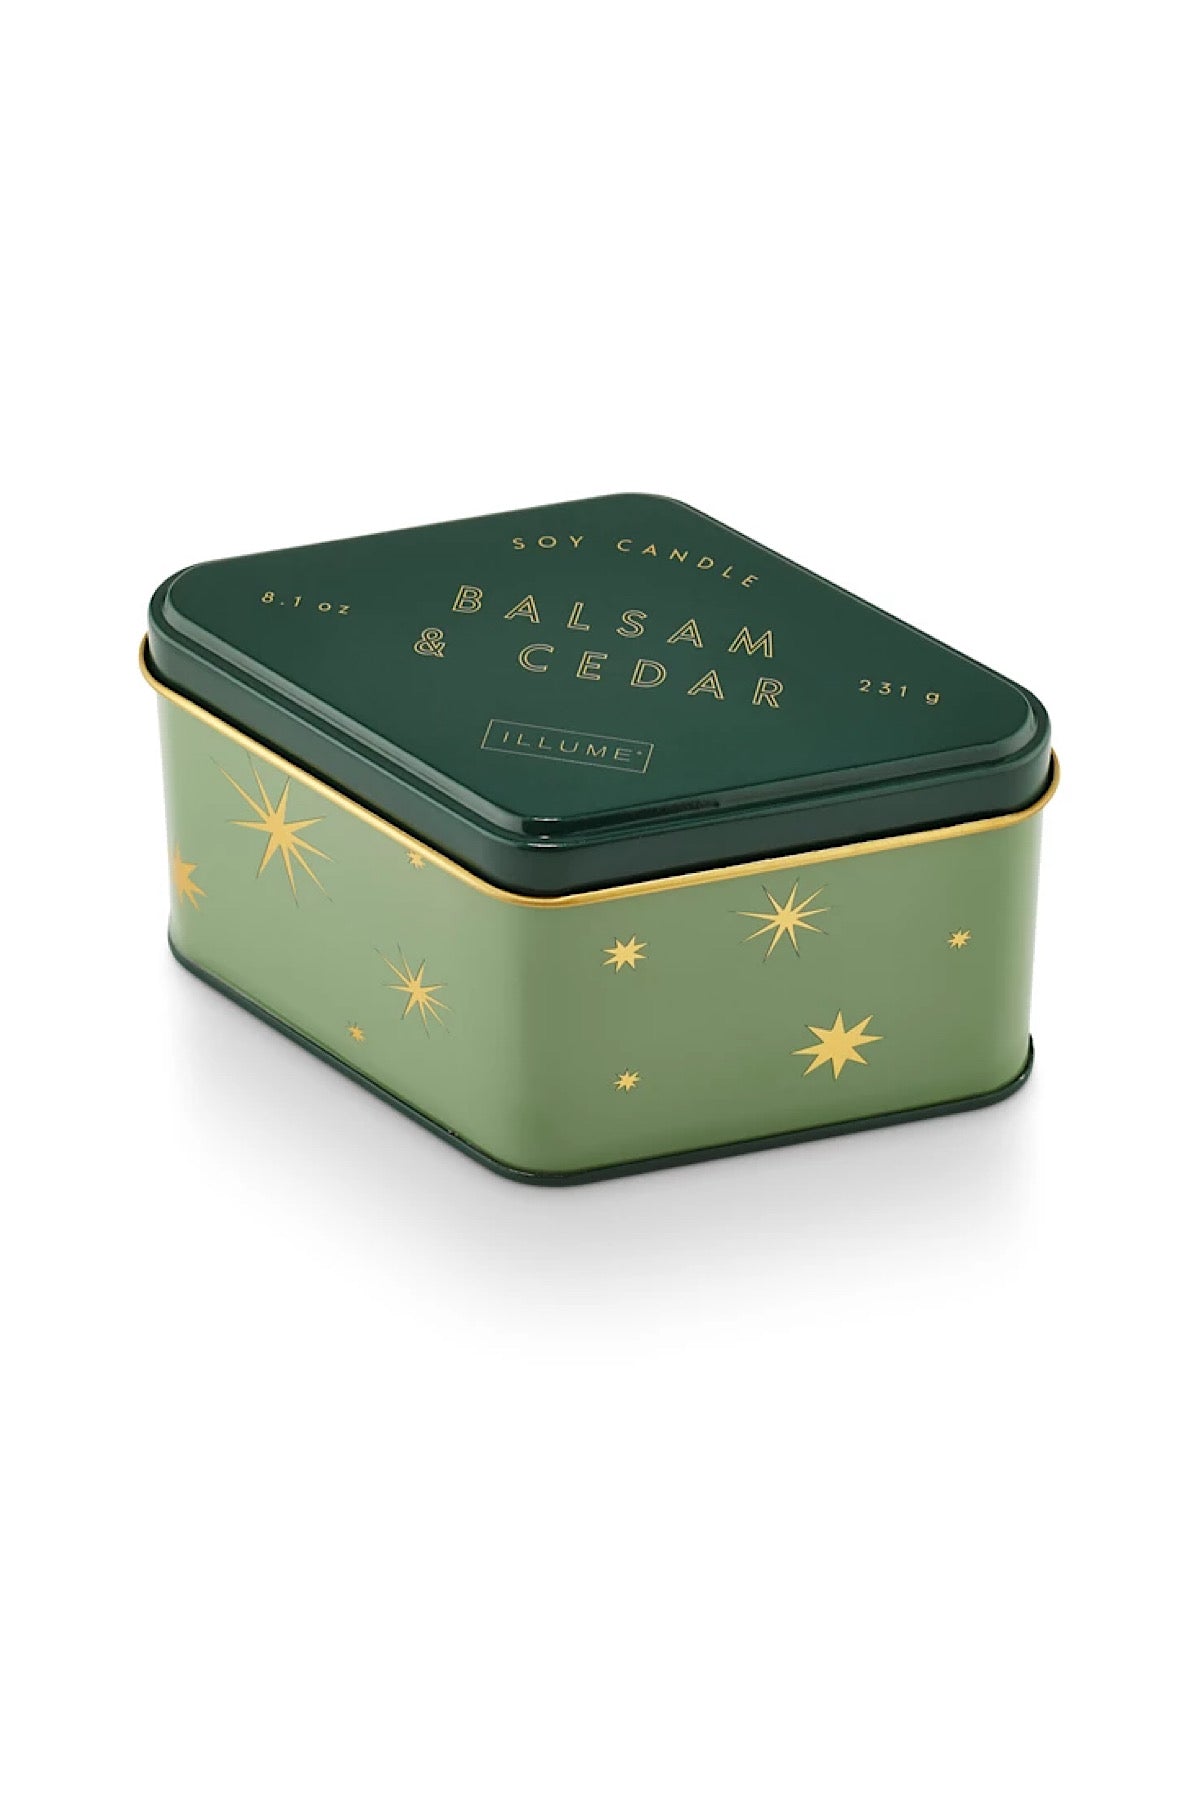 Balsam & Cedar Diamond Mini Tin Candle